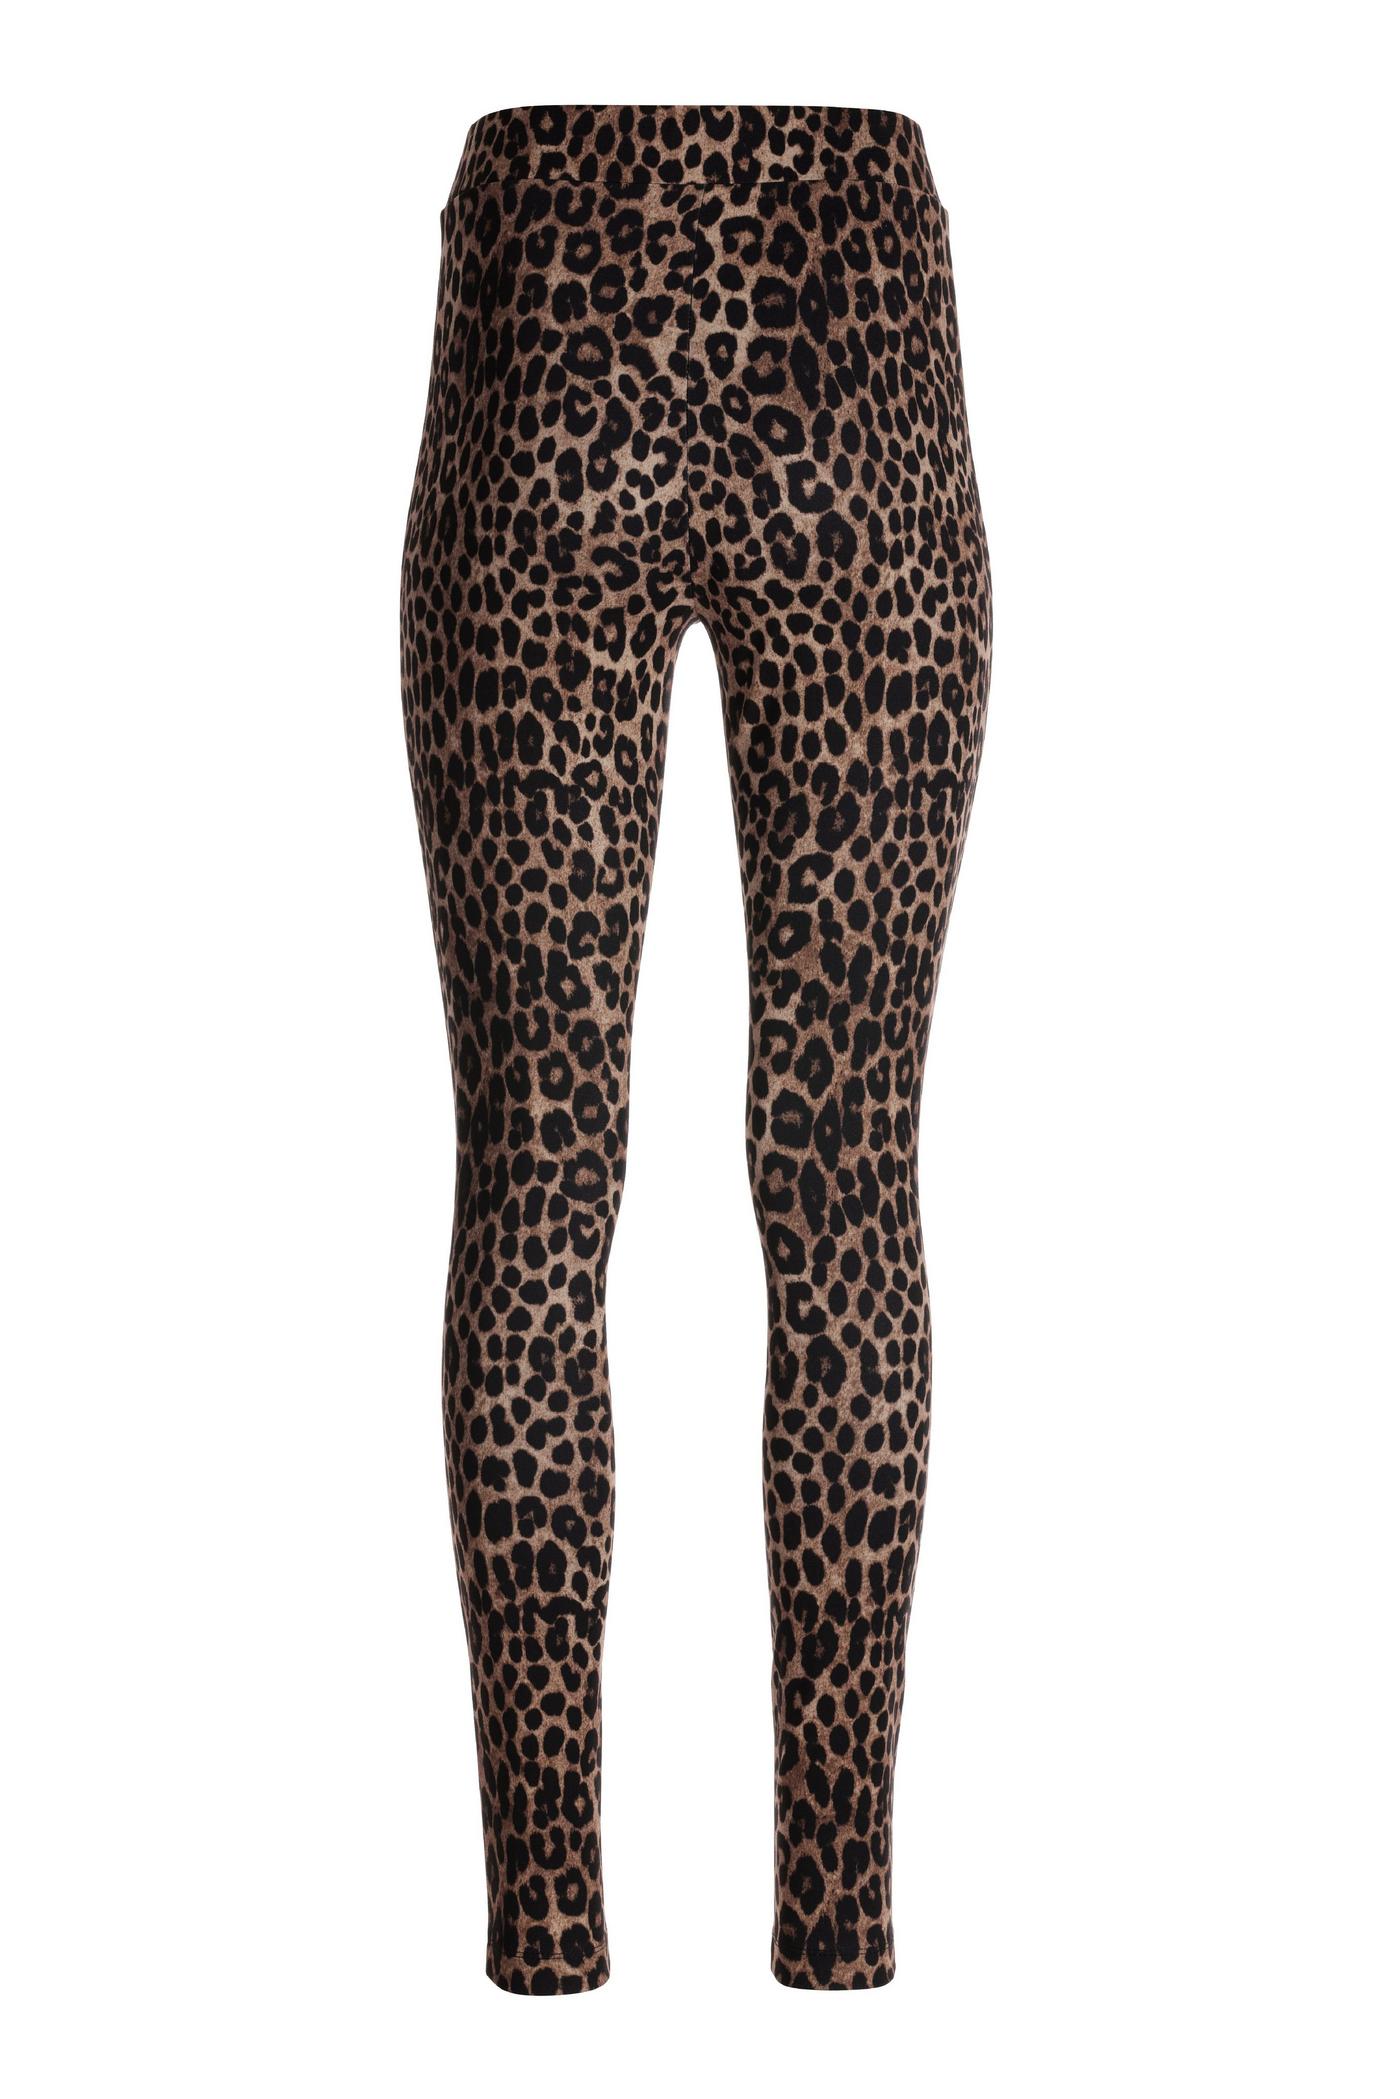 Bad Boned Legging - Black / Leopard Stripe